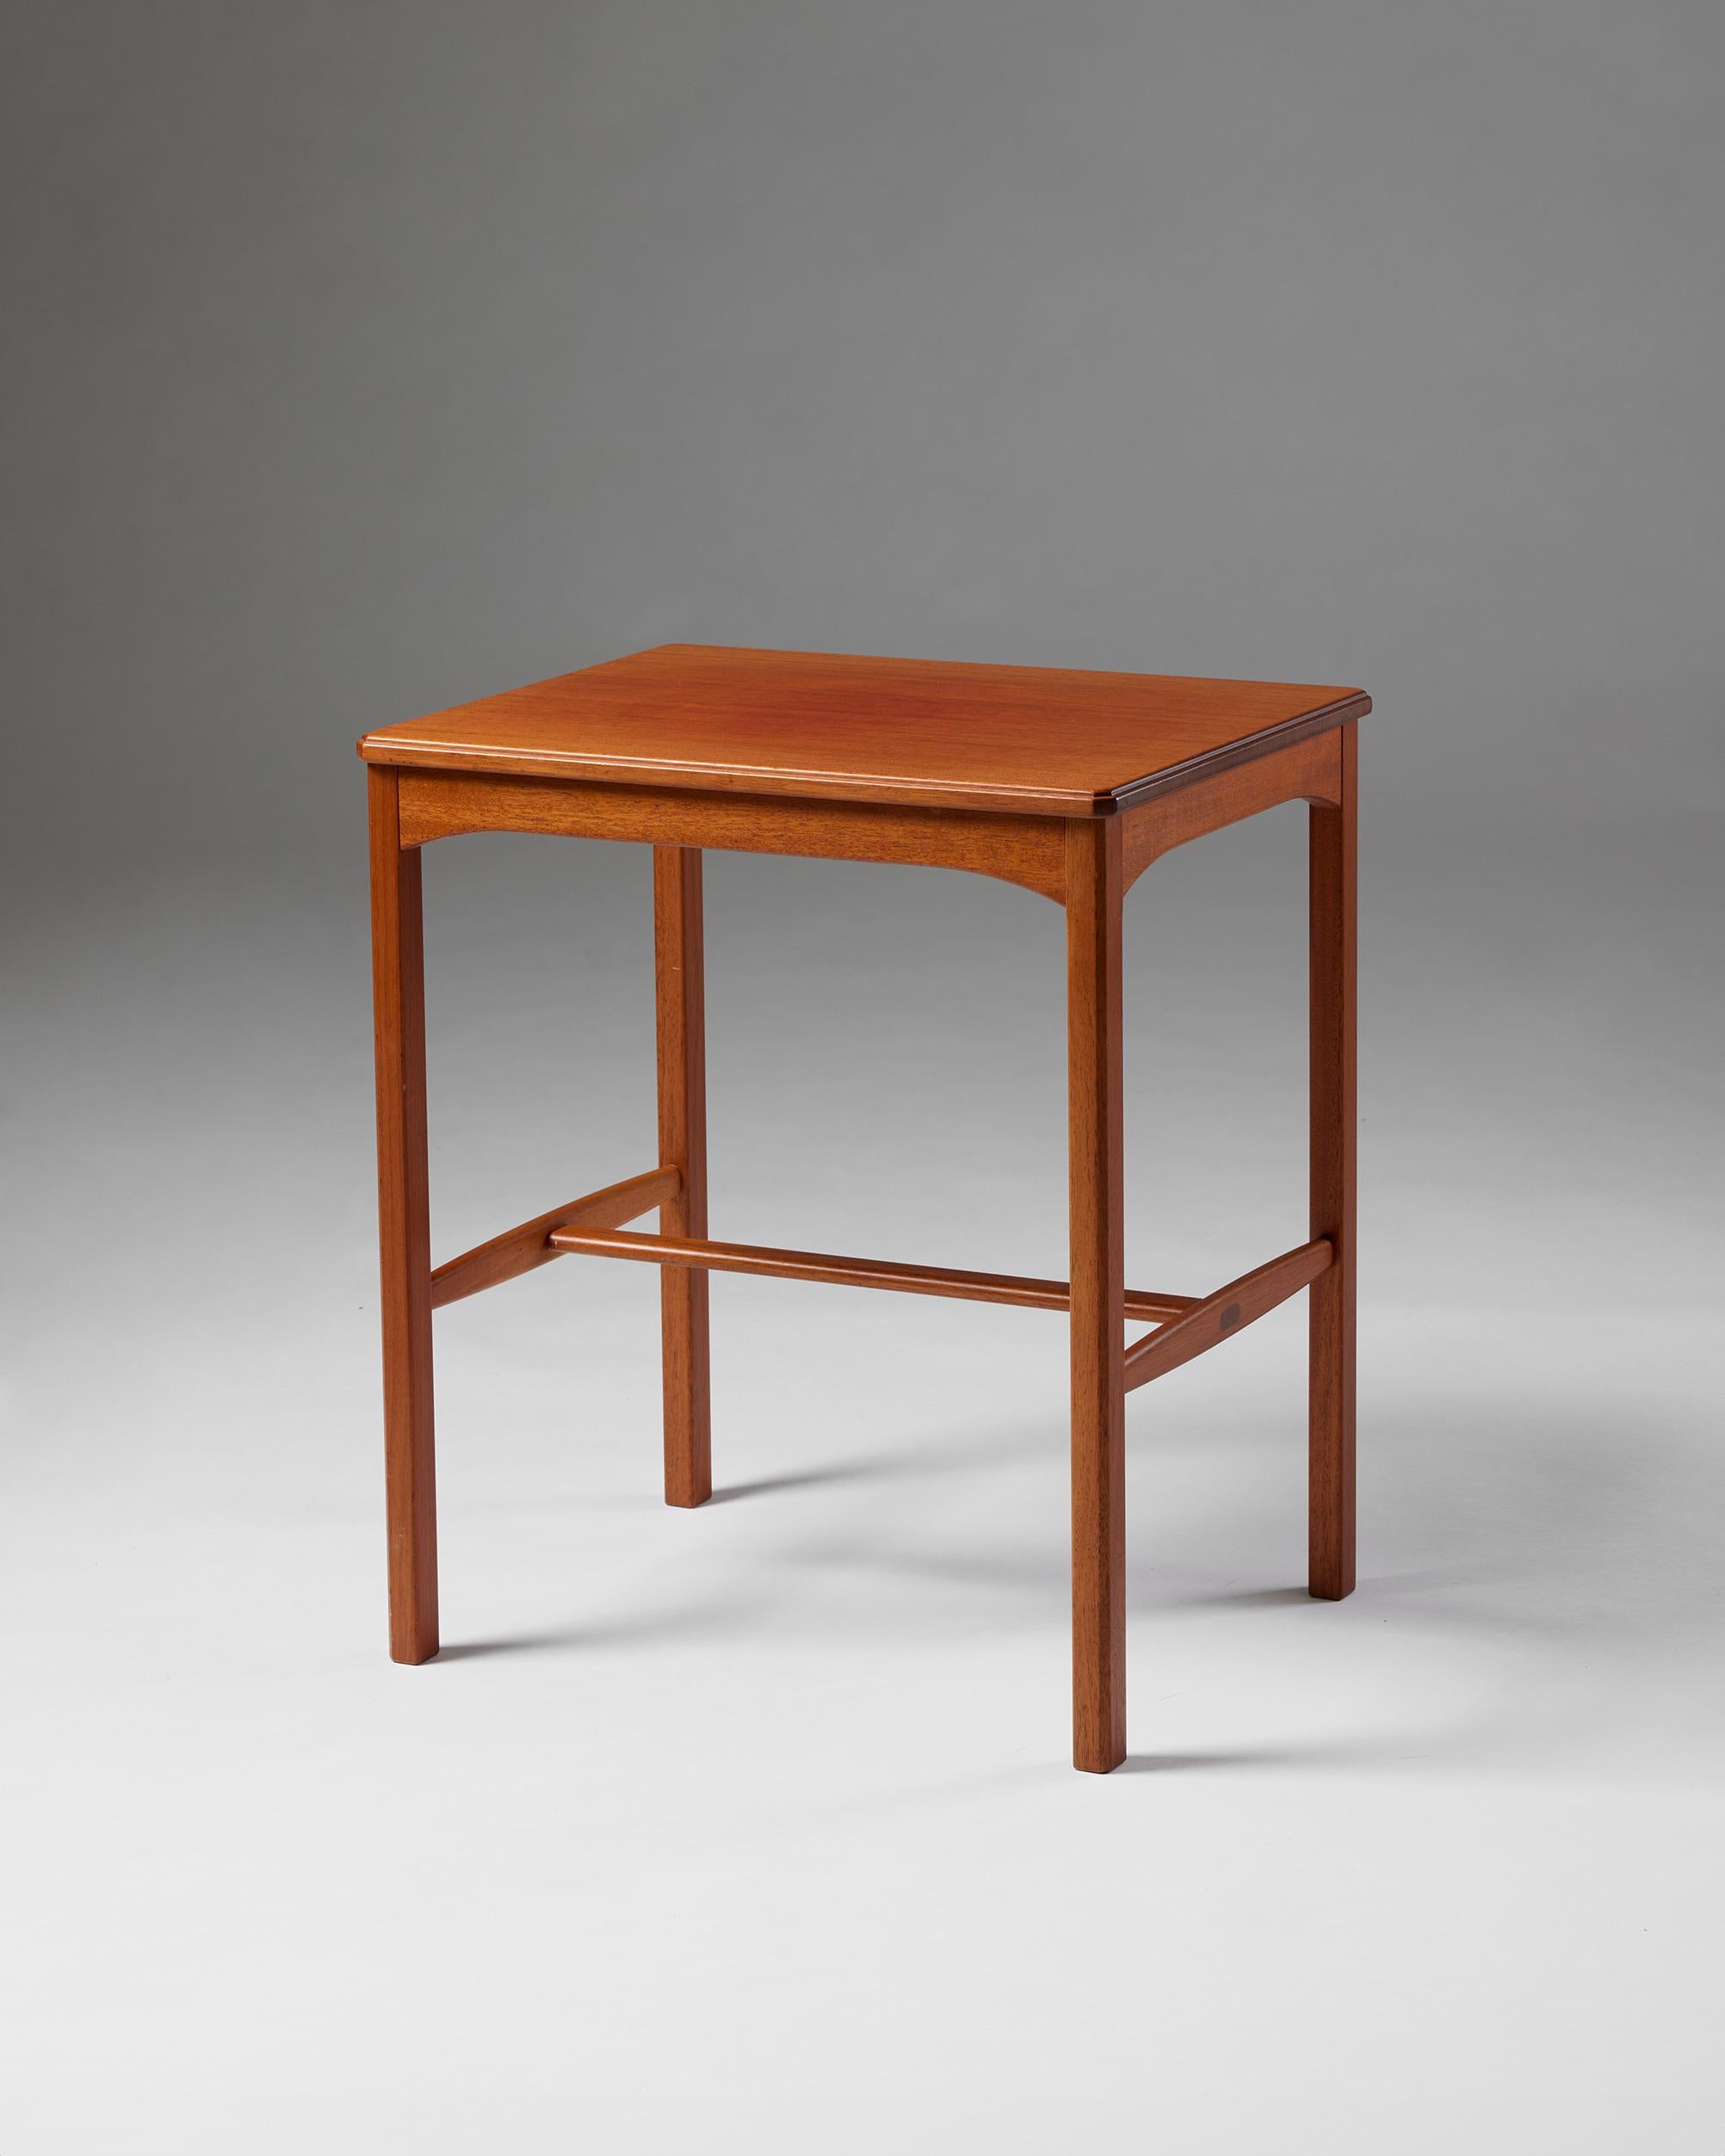 Side table ‘October’ designed by Carl Malmsten,
Sweden, 1930s.
Walnut.

Stamped.
